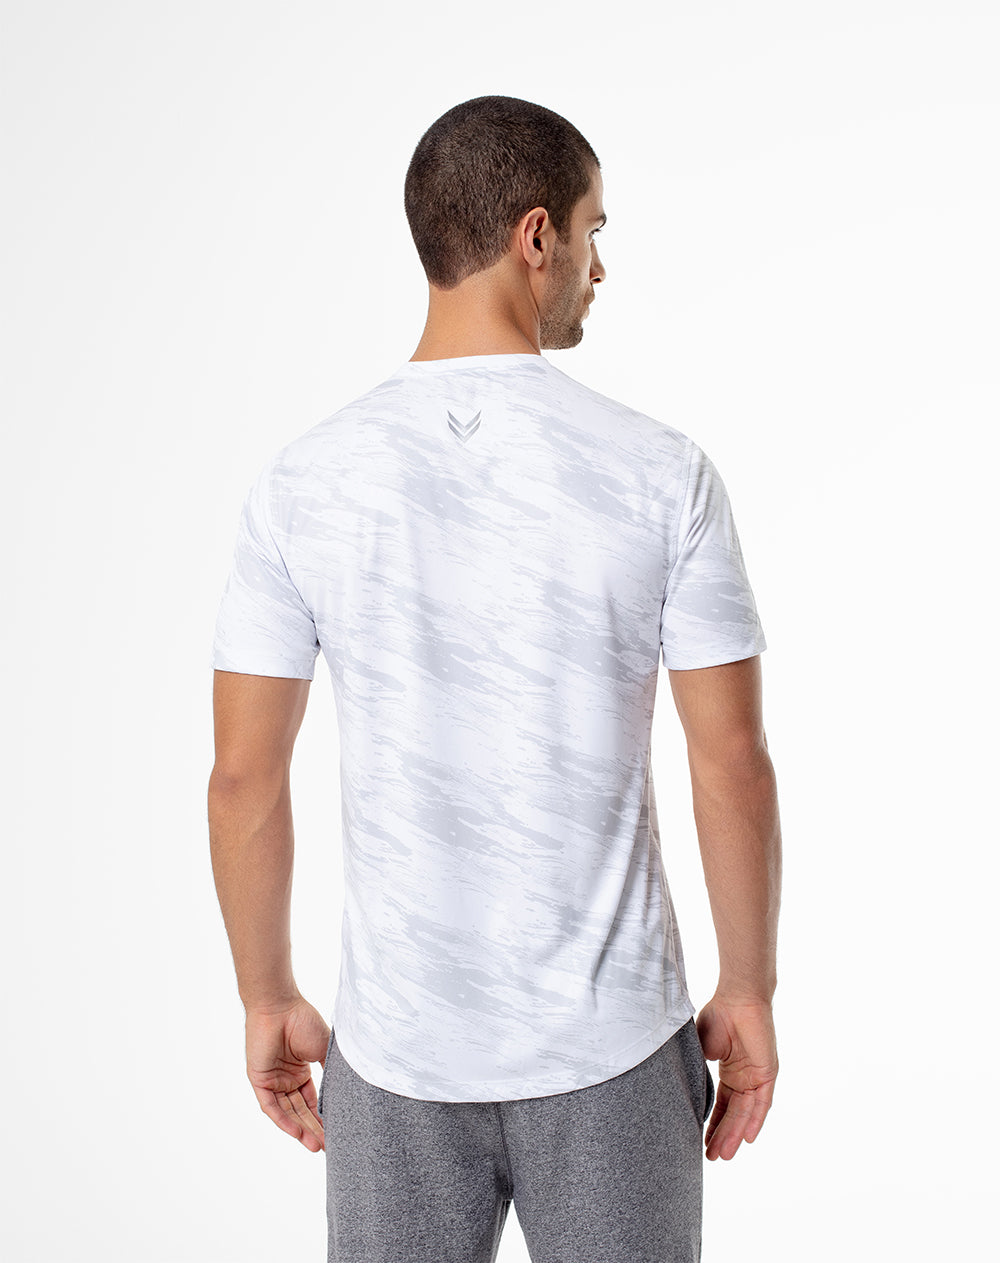 Camiseta slim fit manga corta blanco estampado